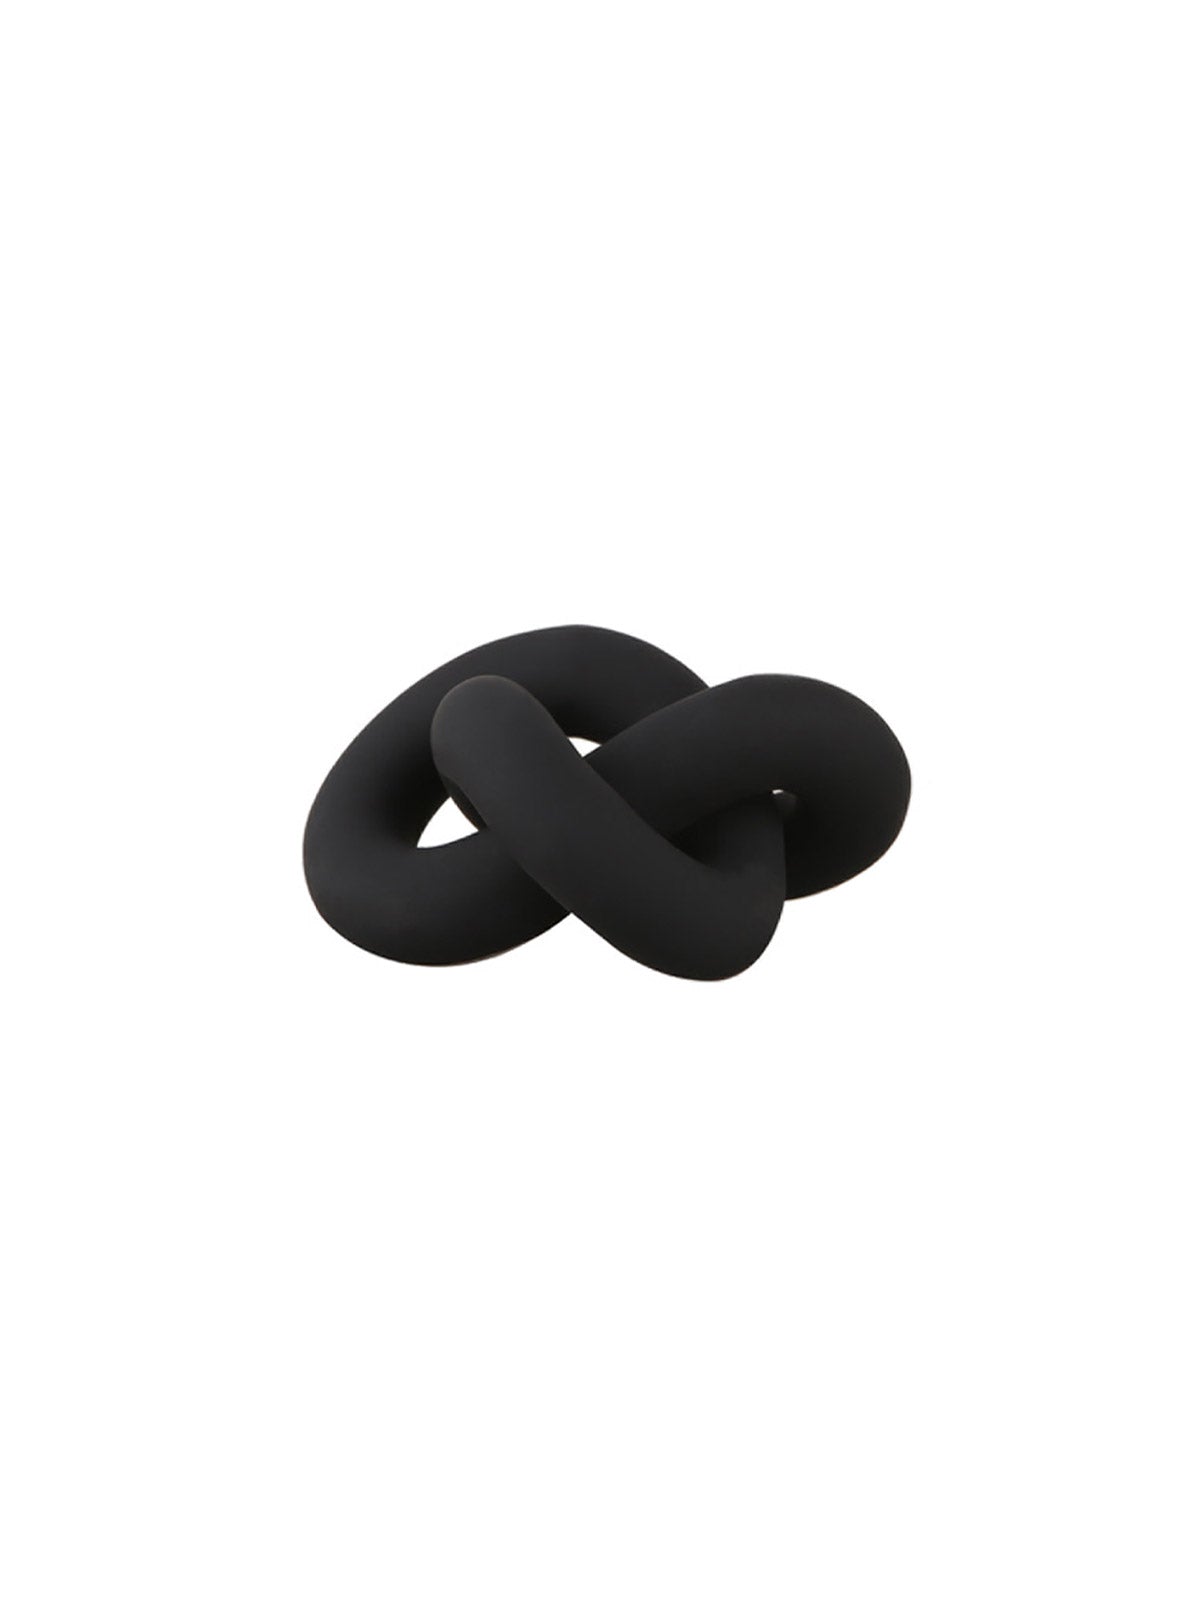 knot_small_black_product1_miljuu.com_1304-039